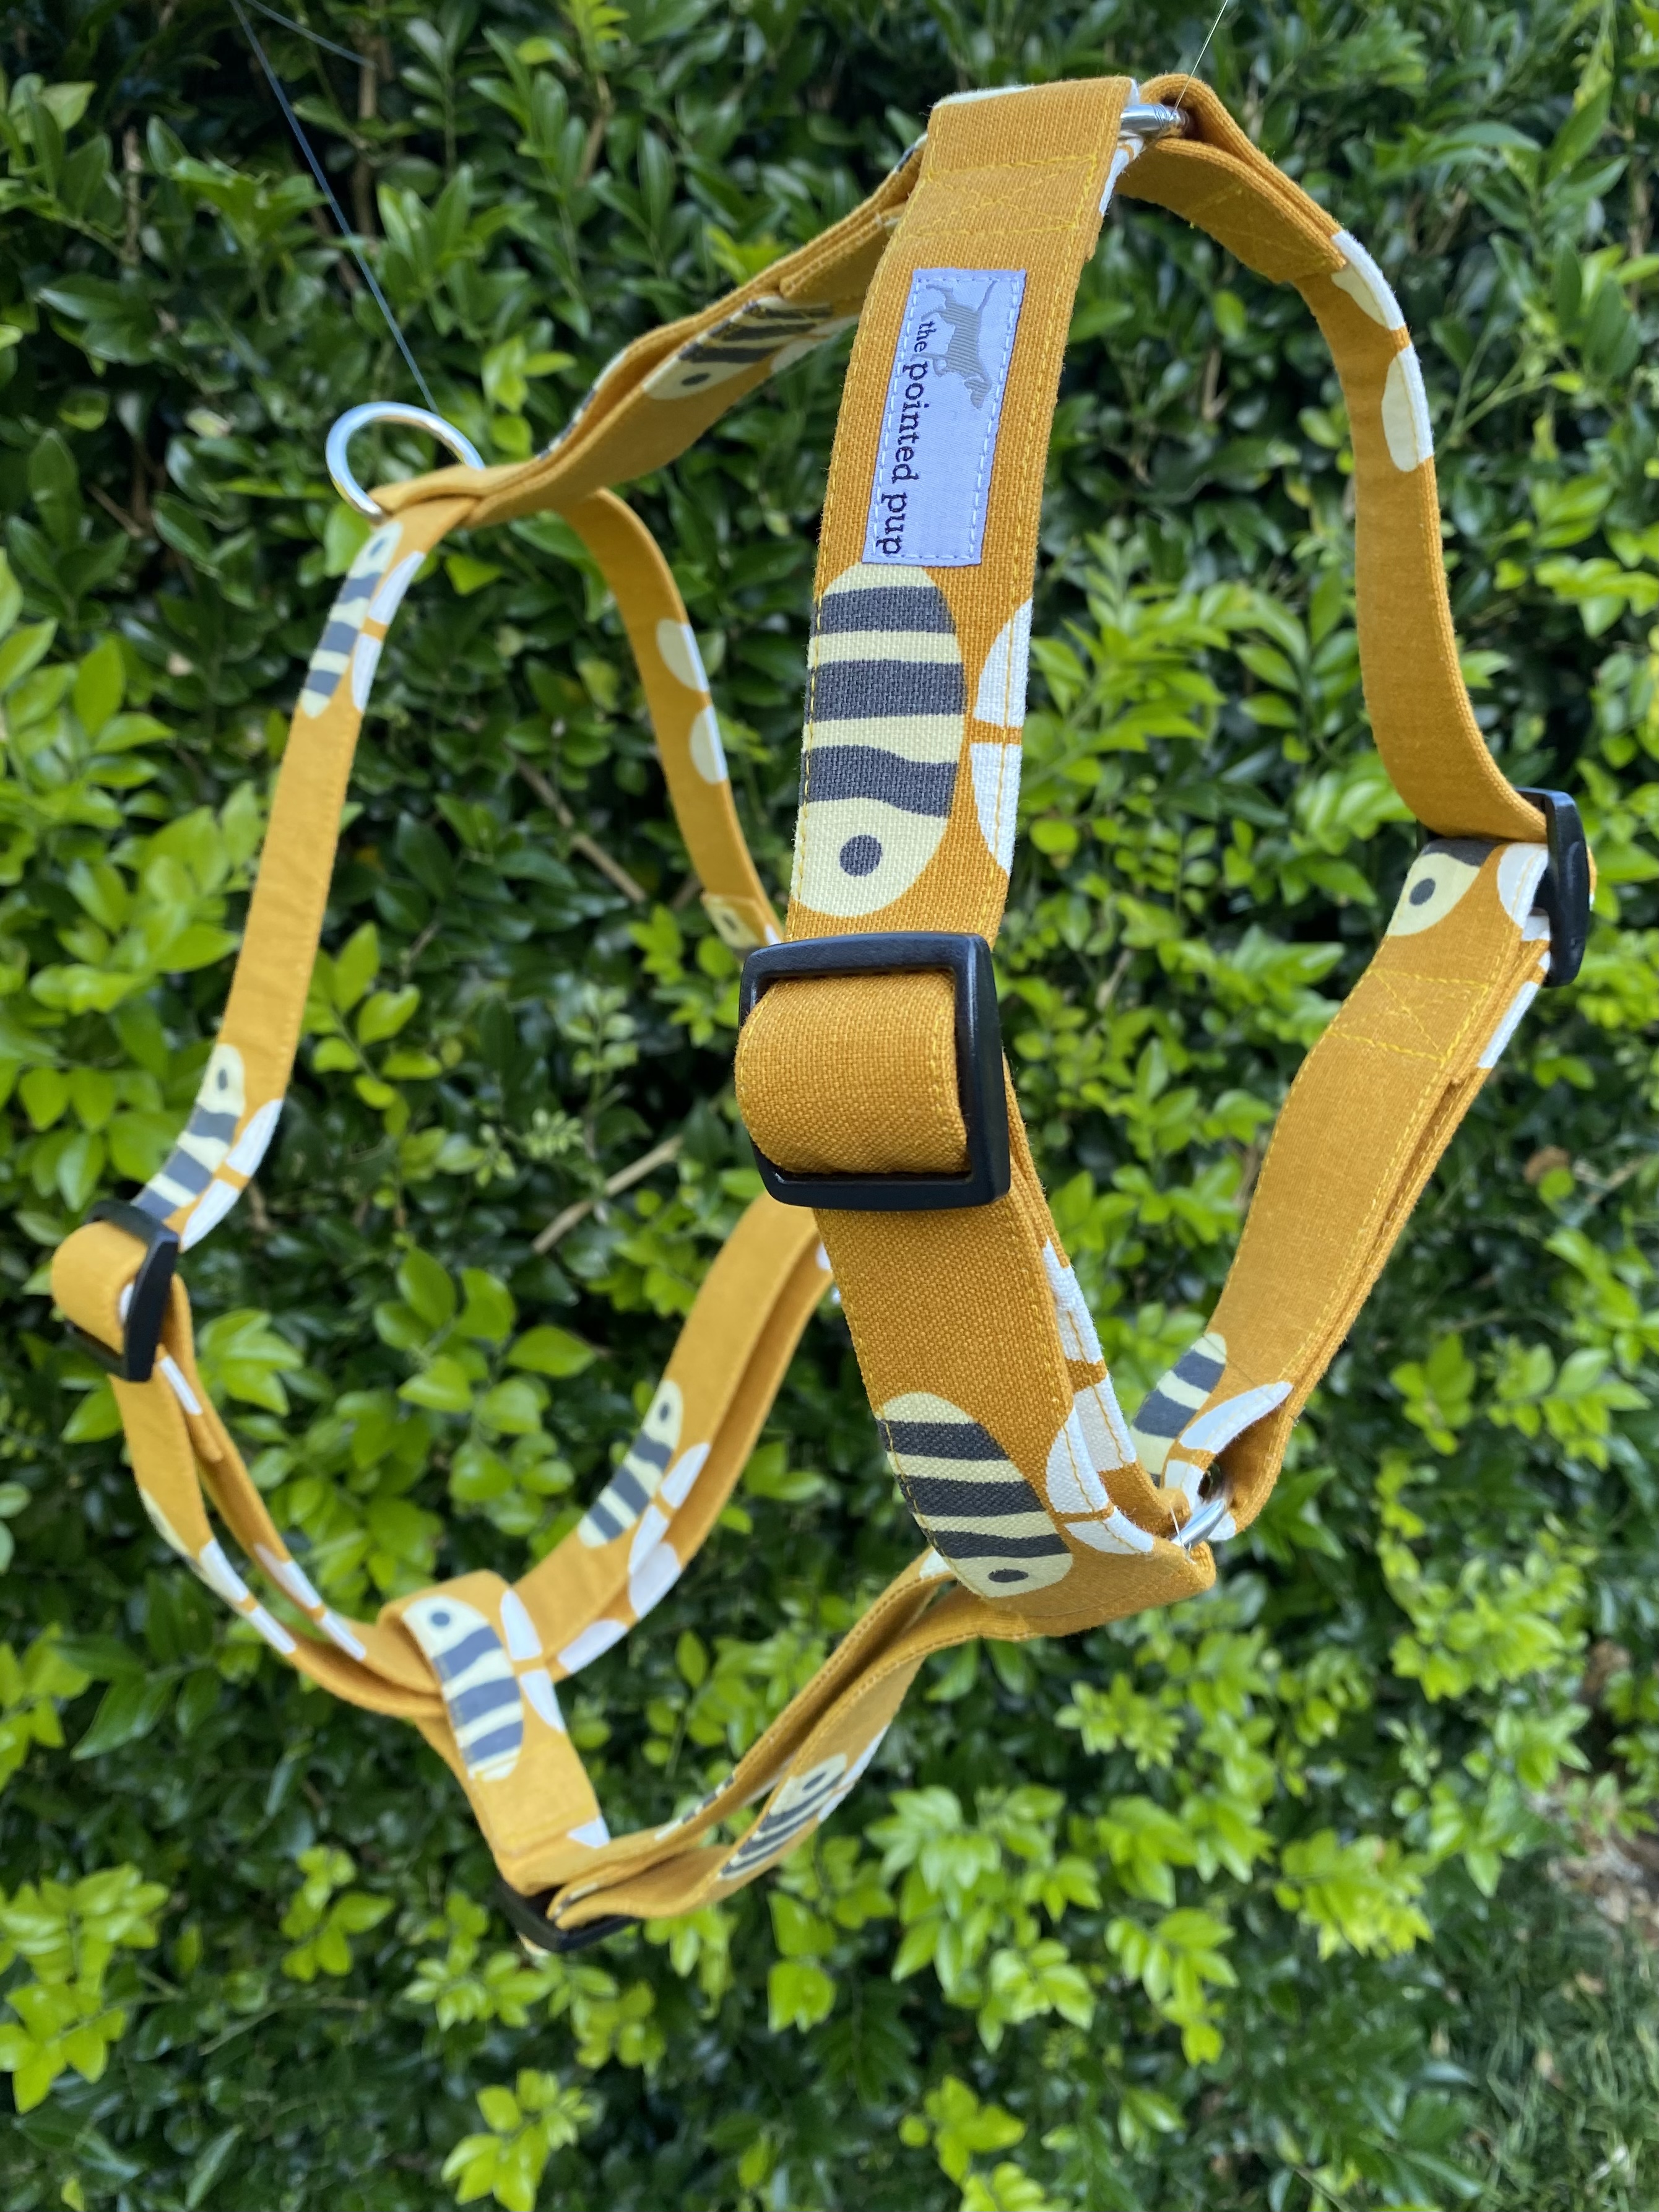 Staffy harness